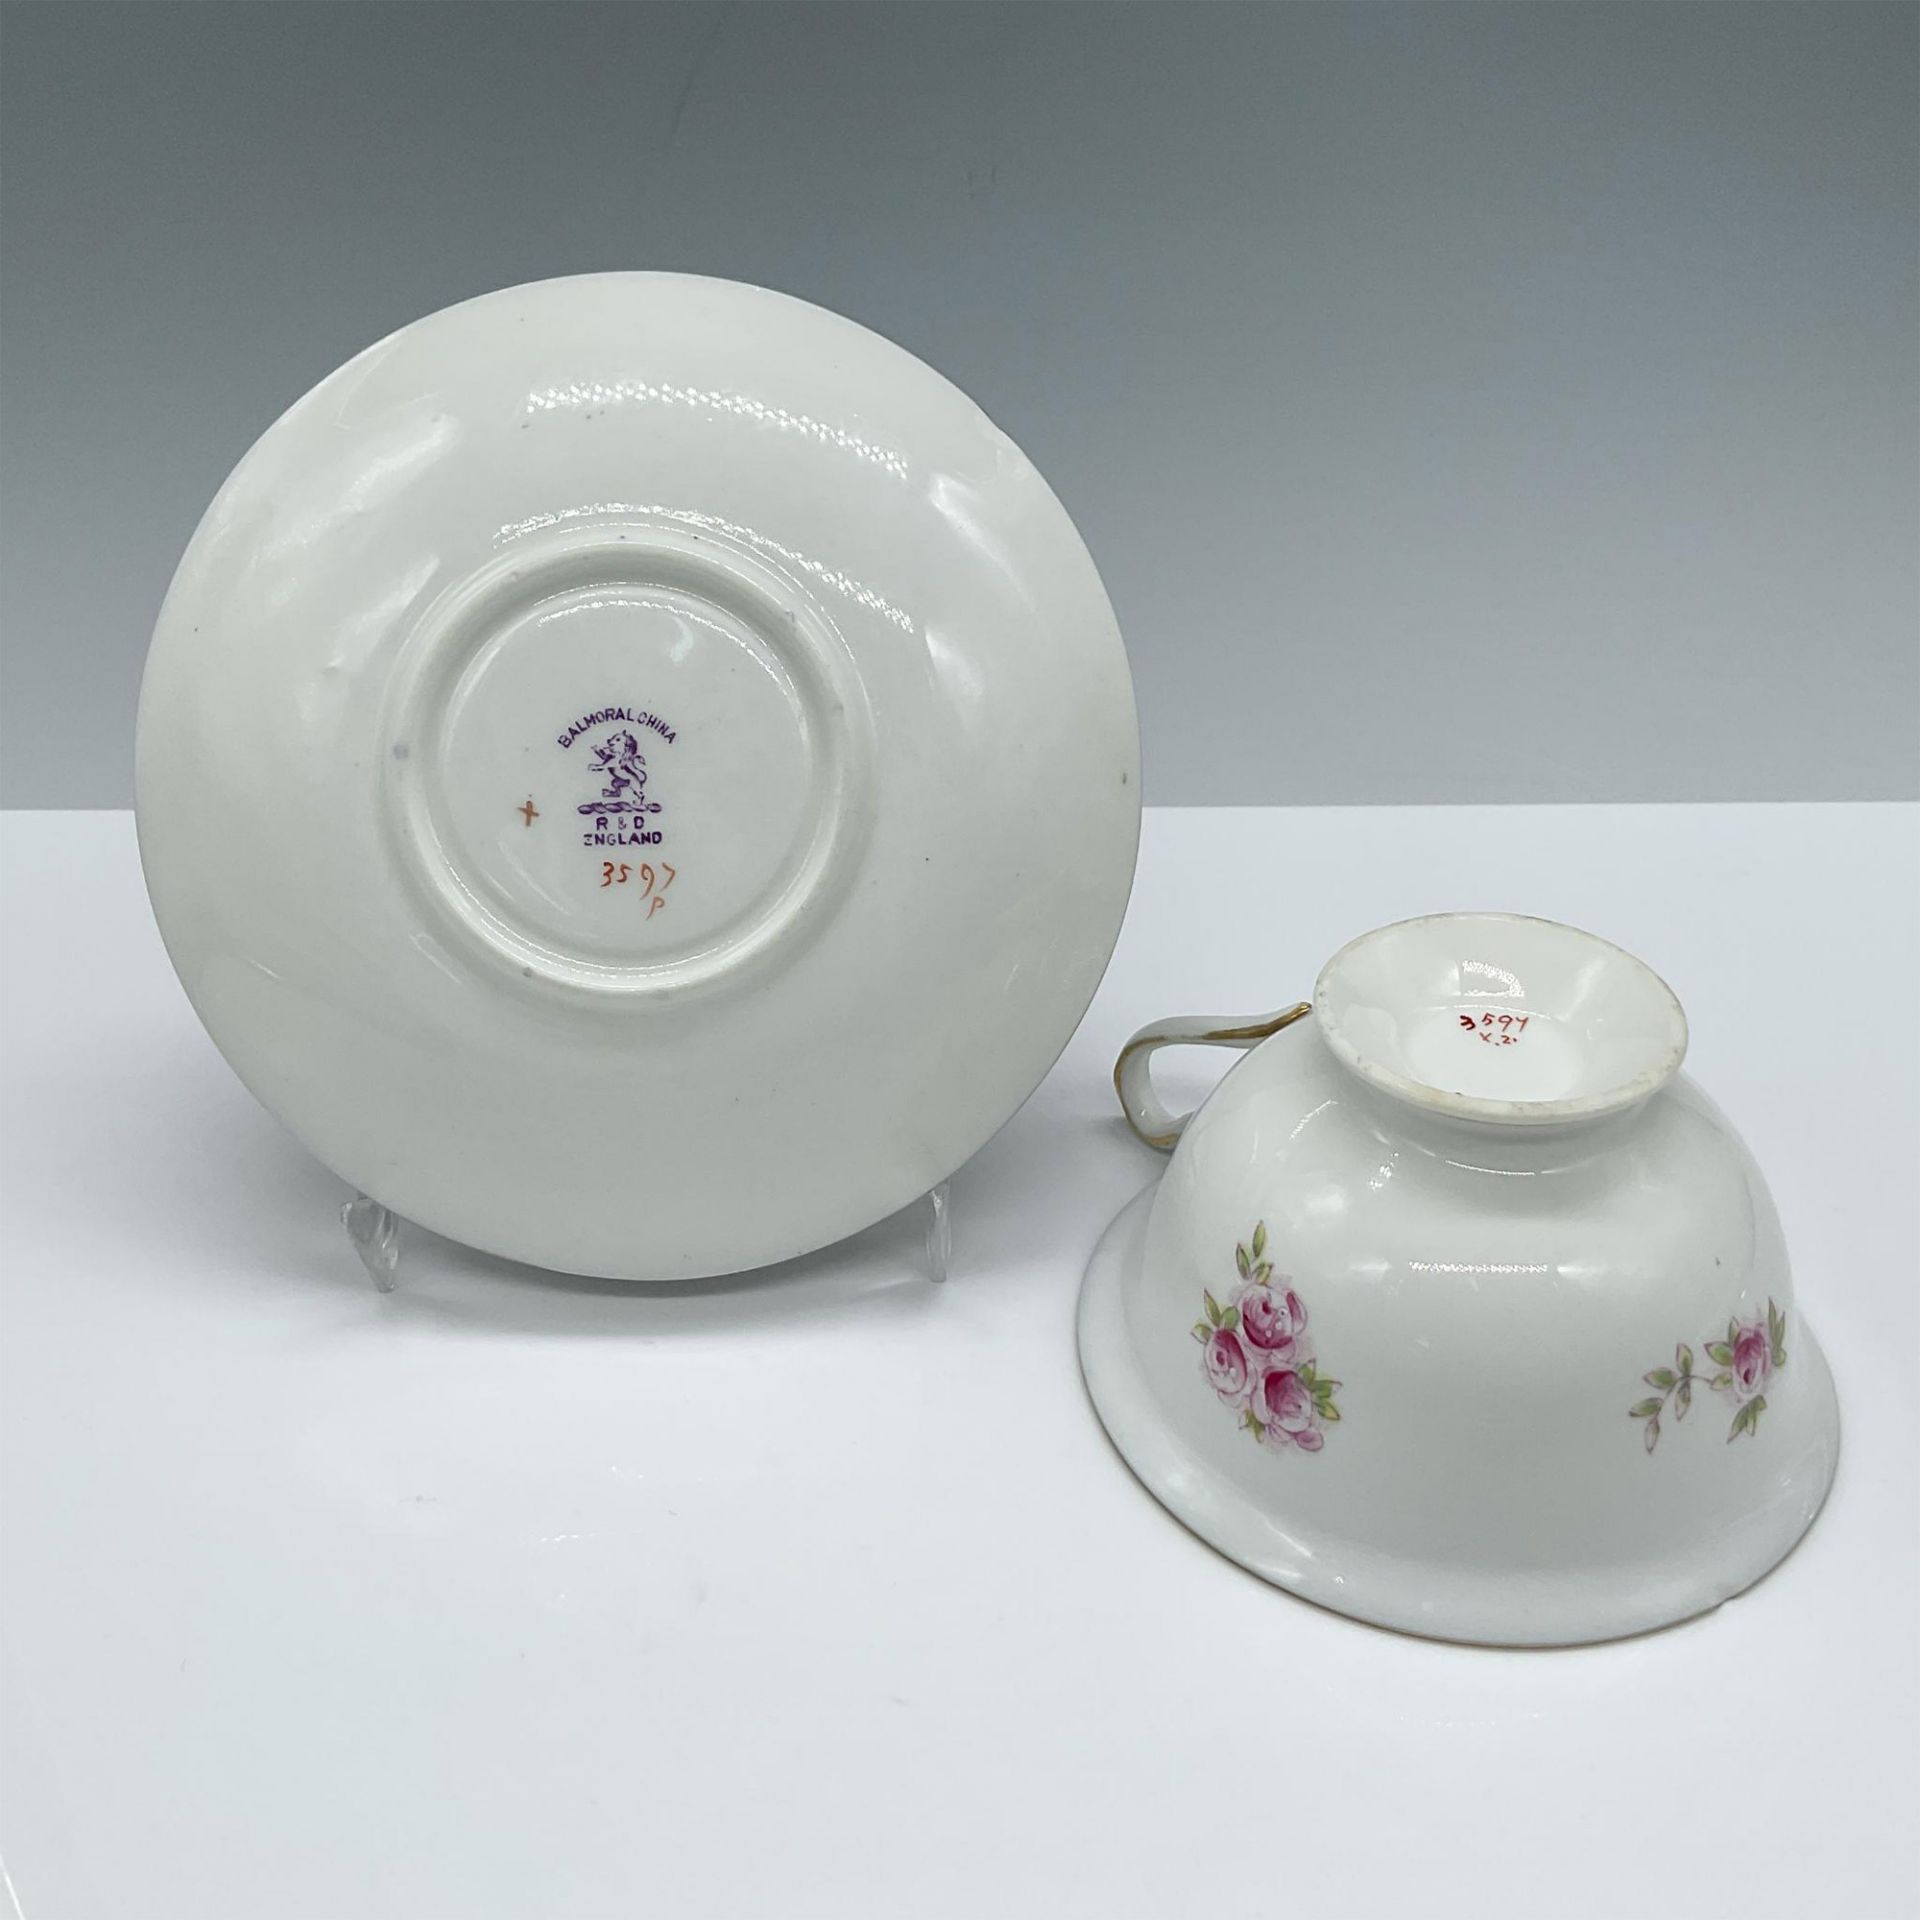 Balmoral Bone China Tea Cup and Saucer Set - Image 3 of 3